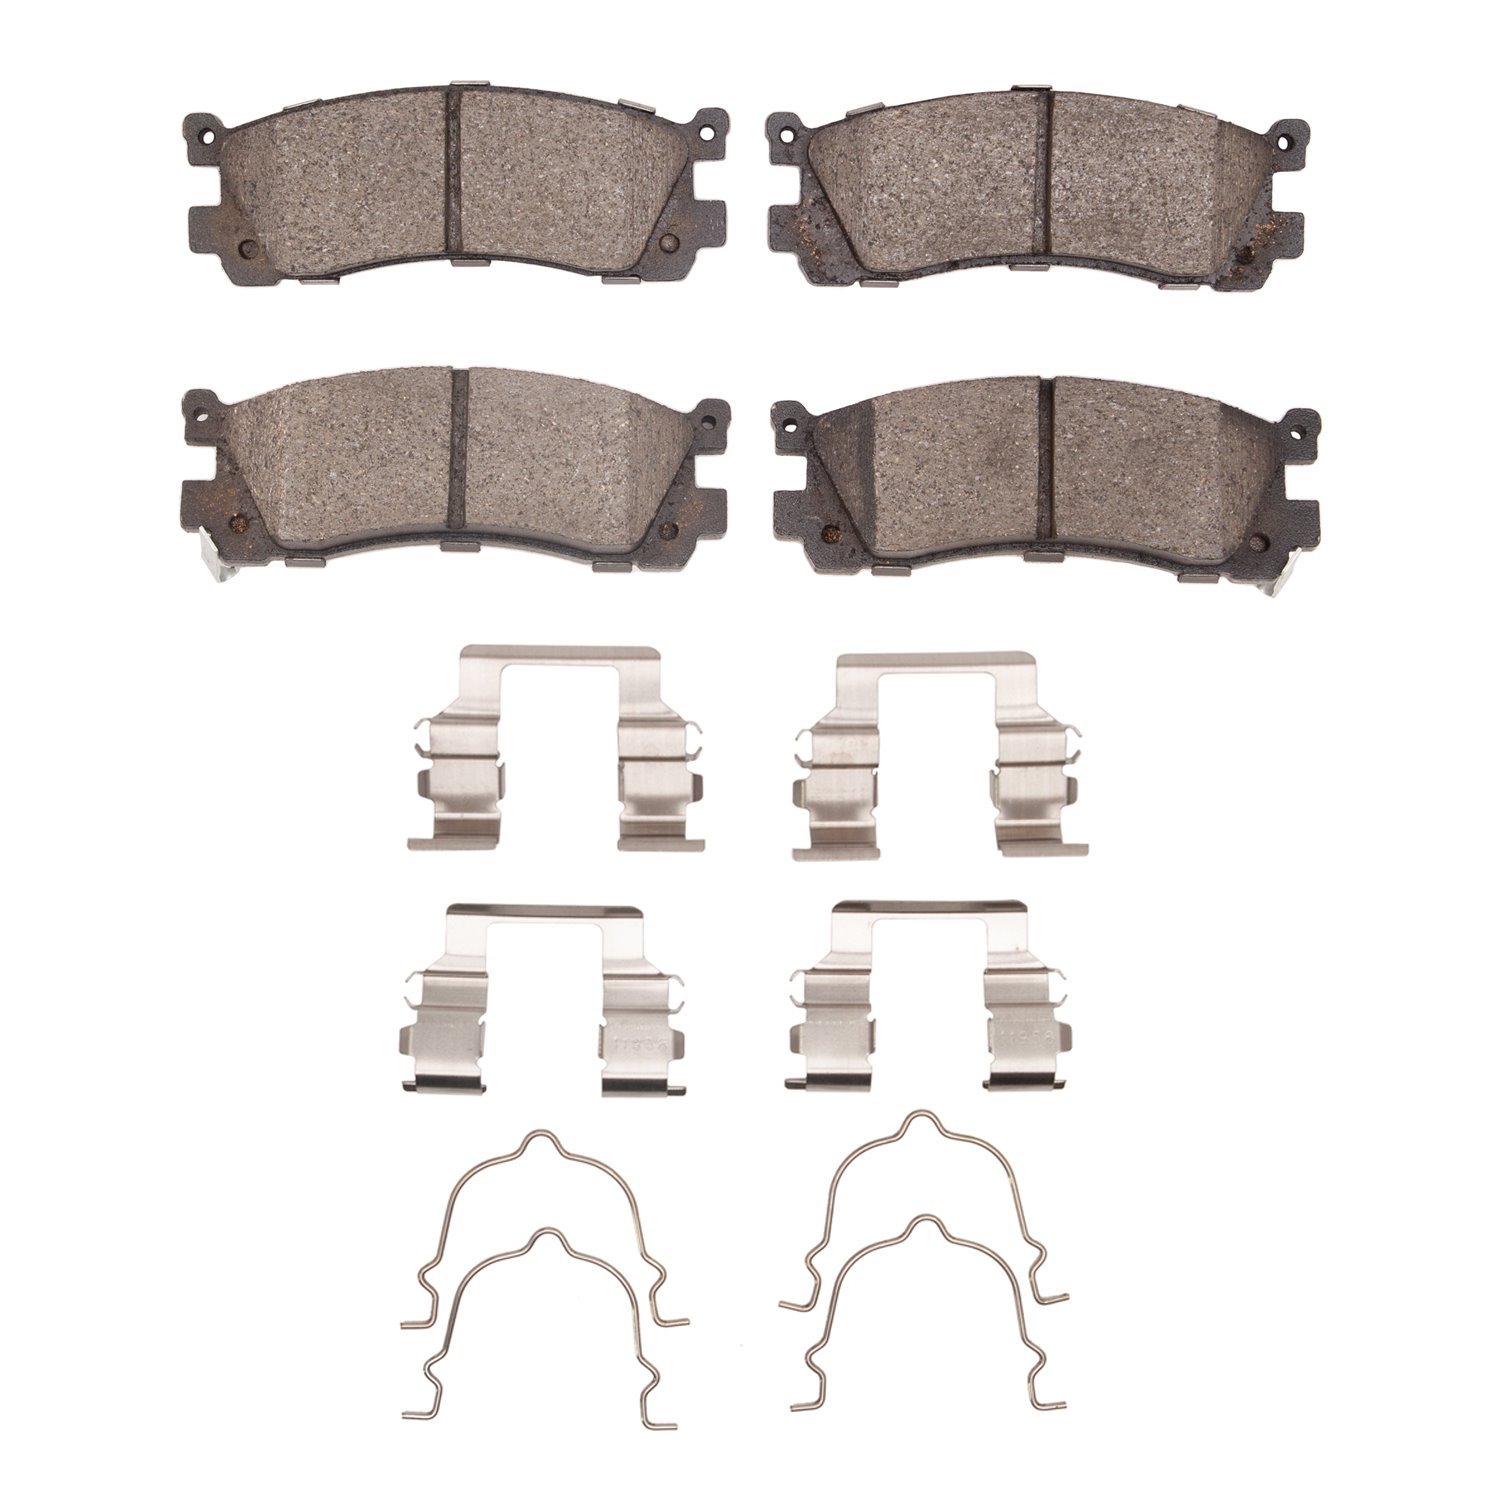 1310-0553-01 3000-Series Ceramic Brake Pads & Hardware Kit, 1992-1998 Ford/Lincoln/Mercury/Mazda, Position: Rear